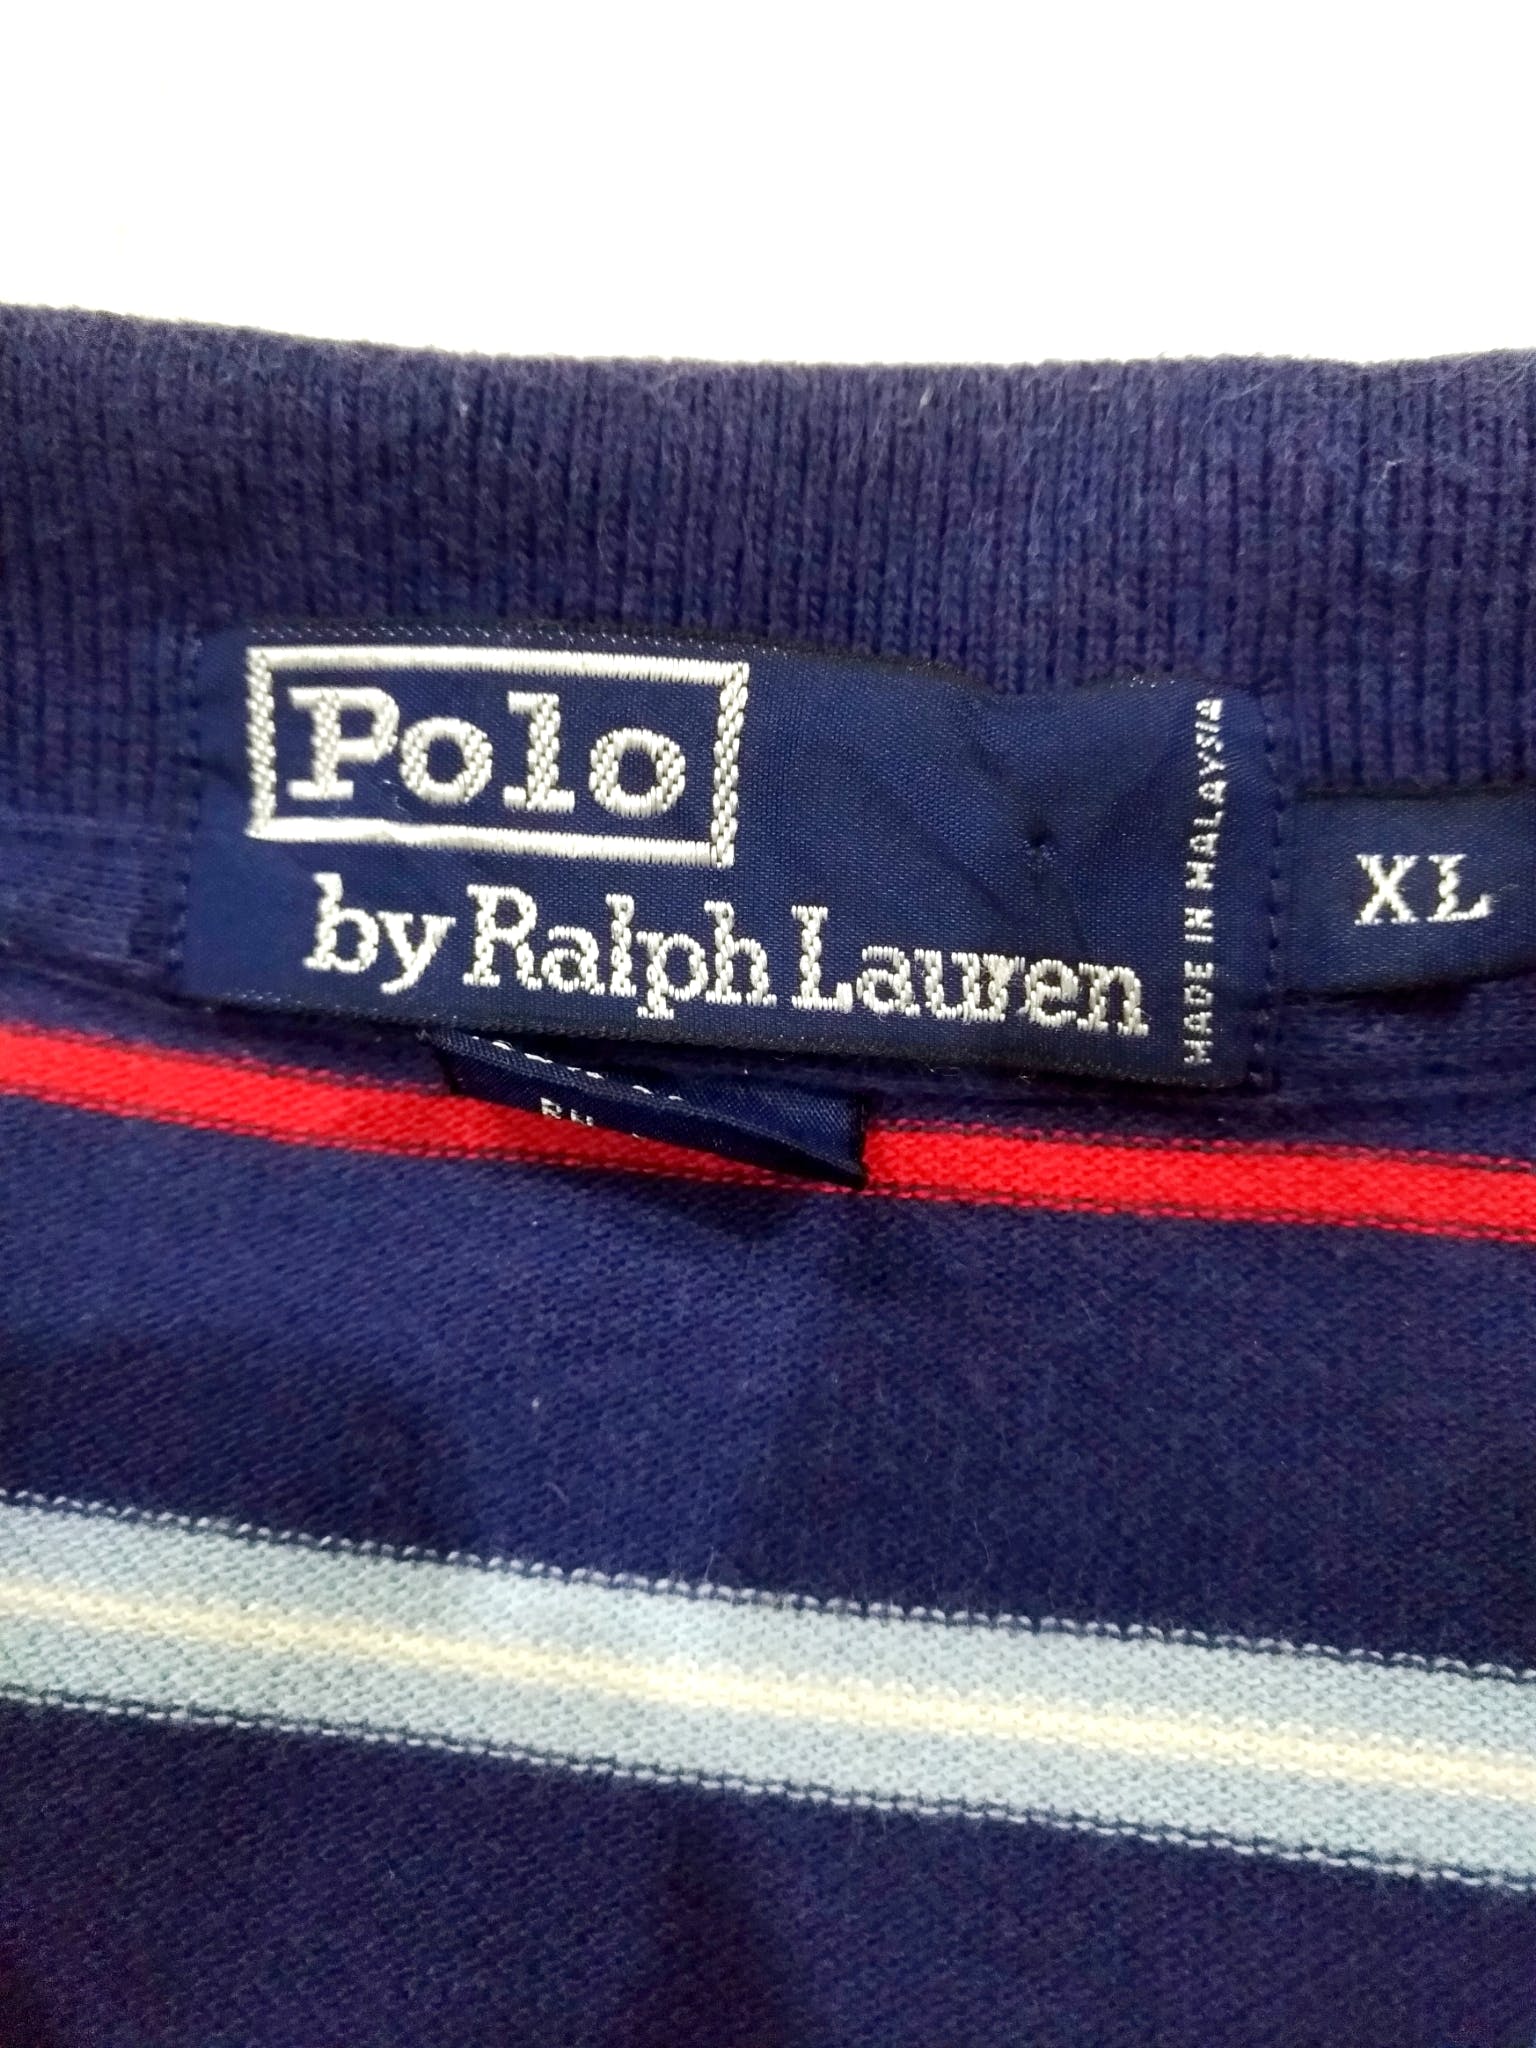 POLO by RALPH LAUREN BLUE STRIPES POLO SHIRT - 6